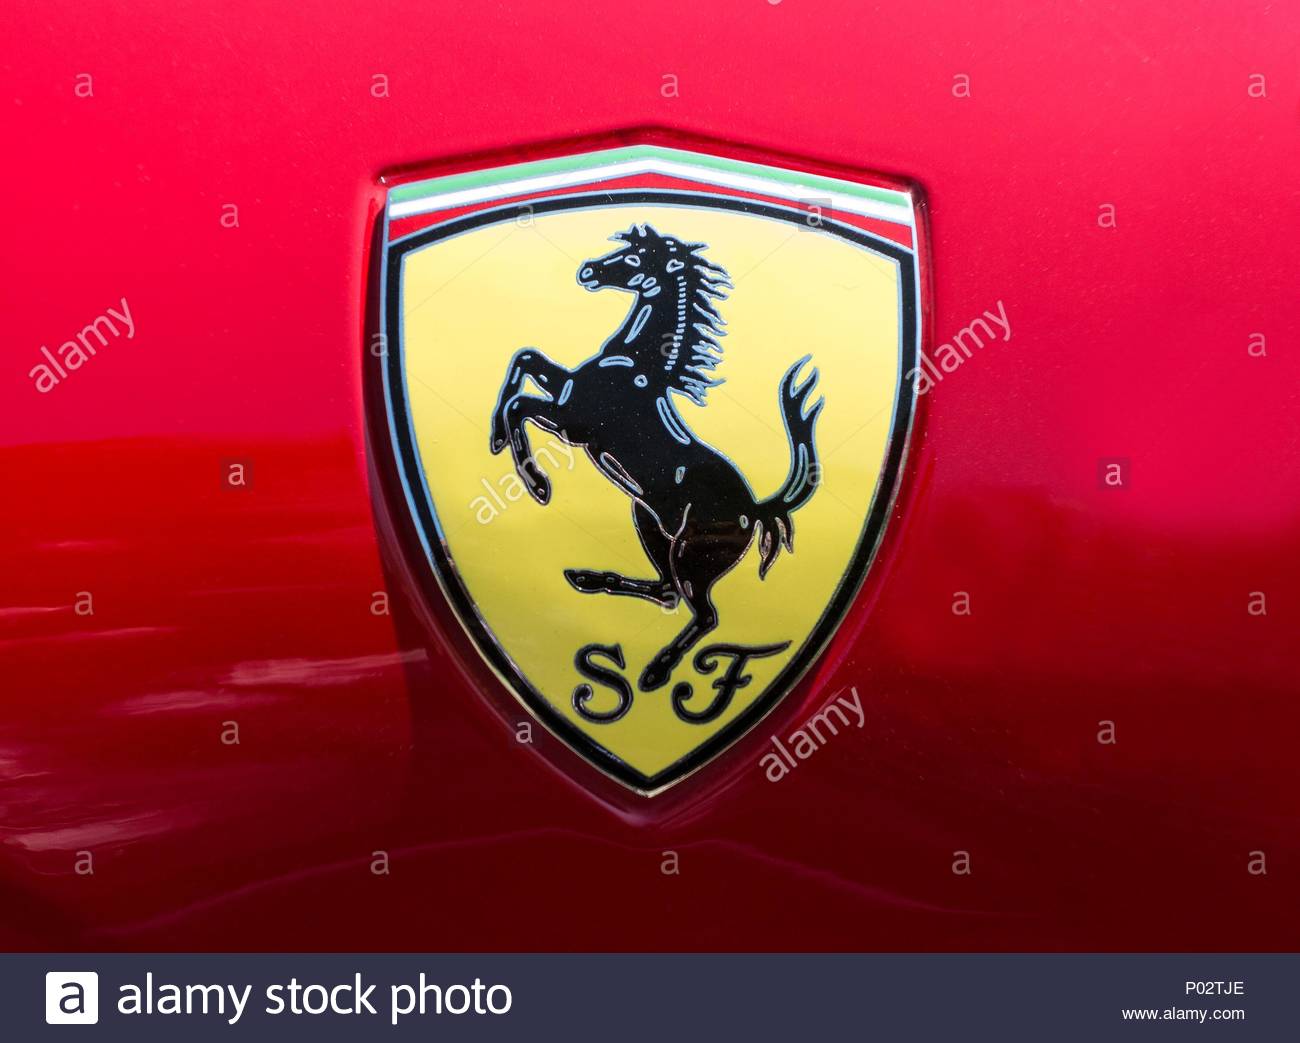 Ferrari logo on red background Stock Photo 206587654   Alamy